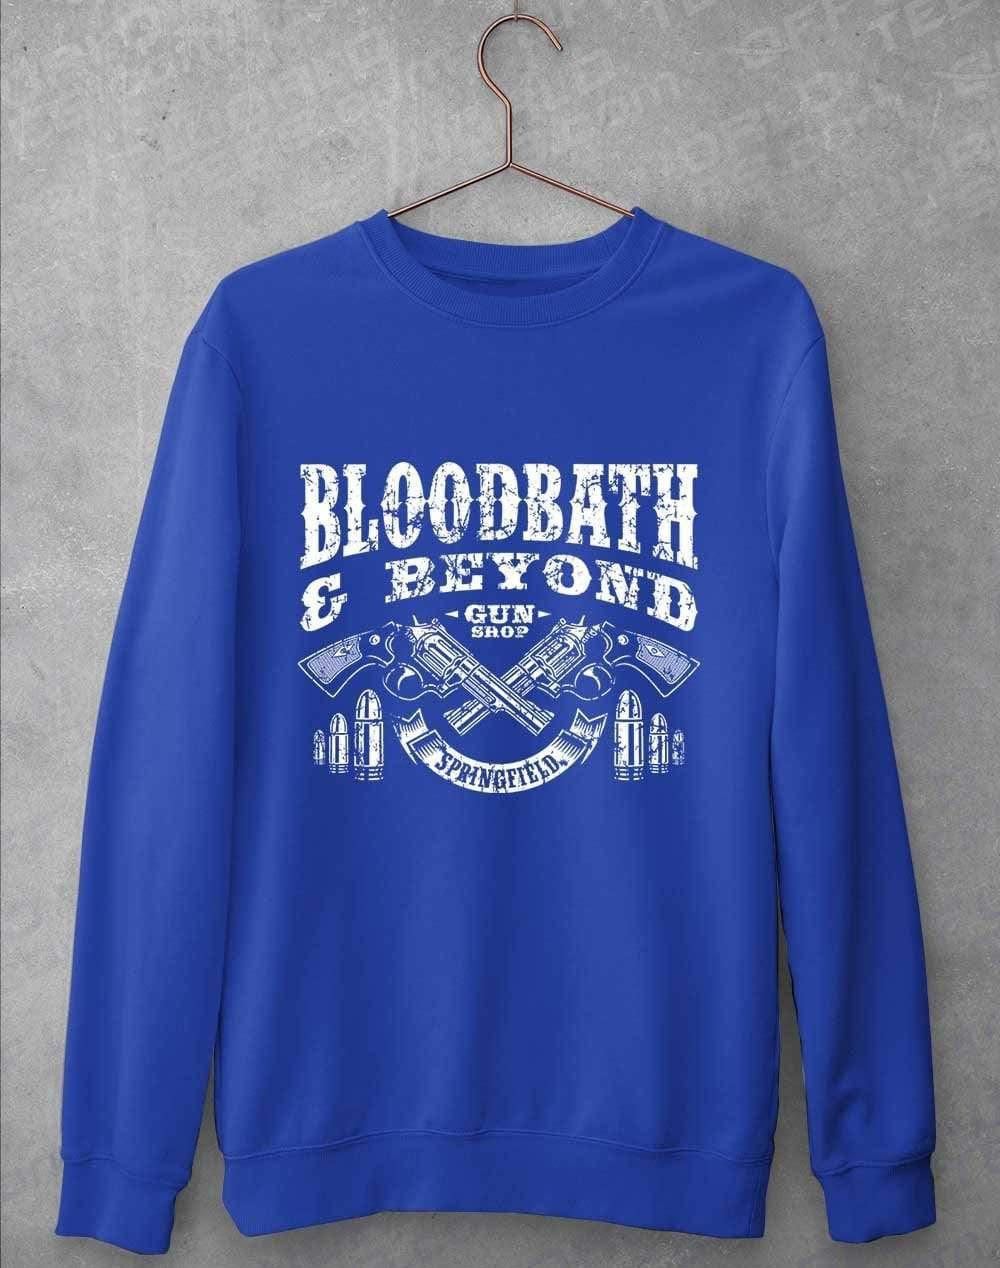 Bloodbath and Beyond Sweatshirt S / Royal Blue  - Off World Tees